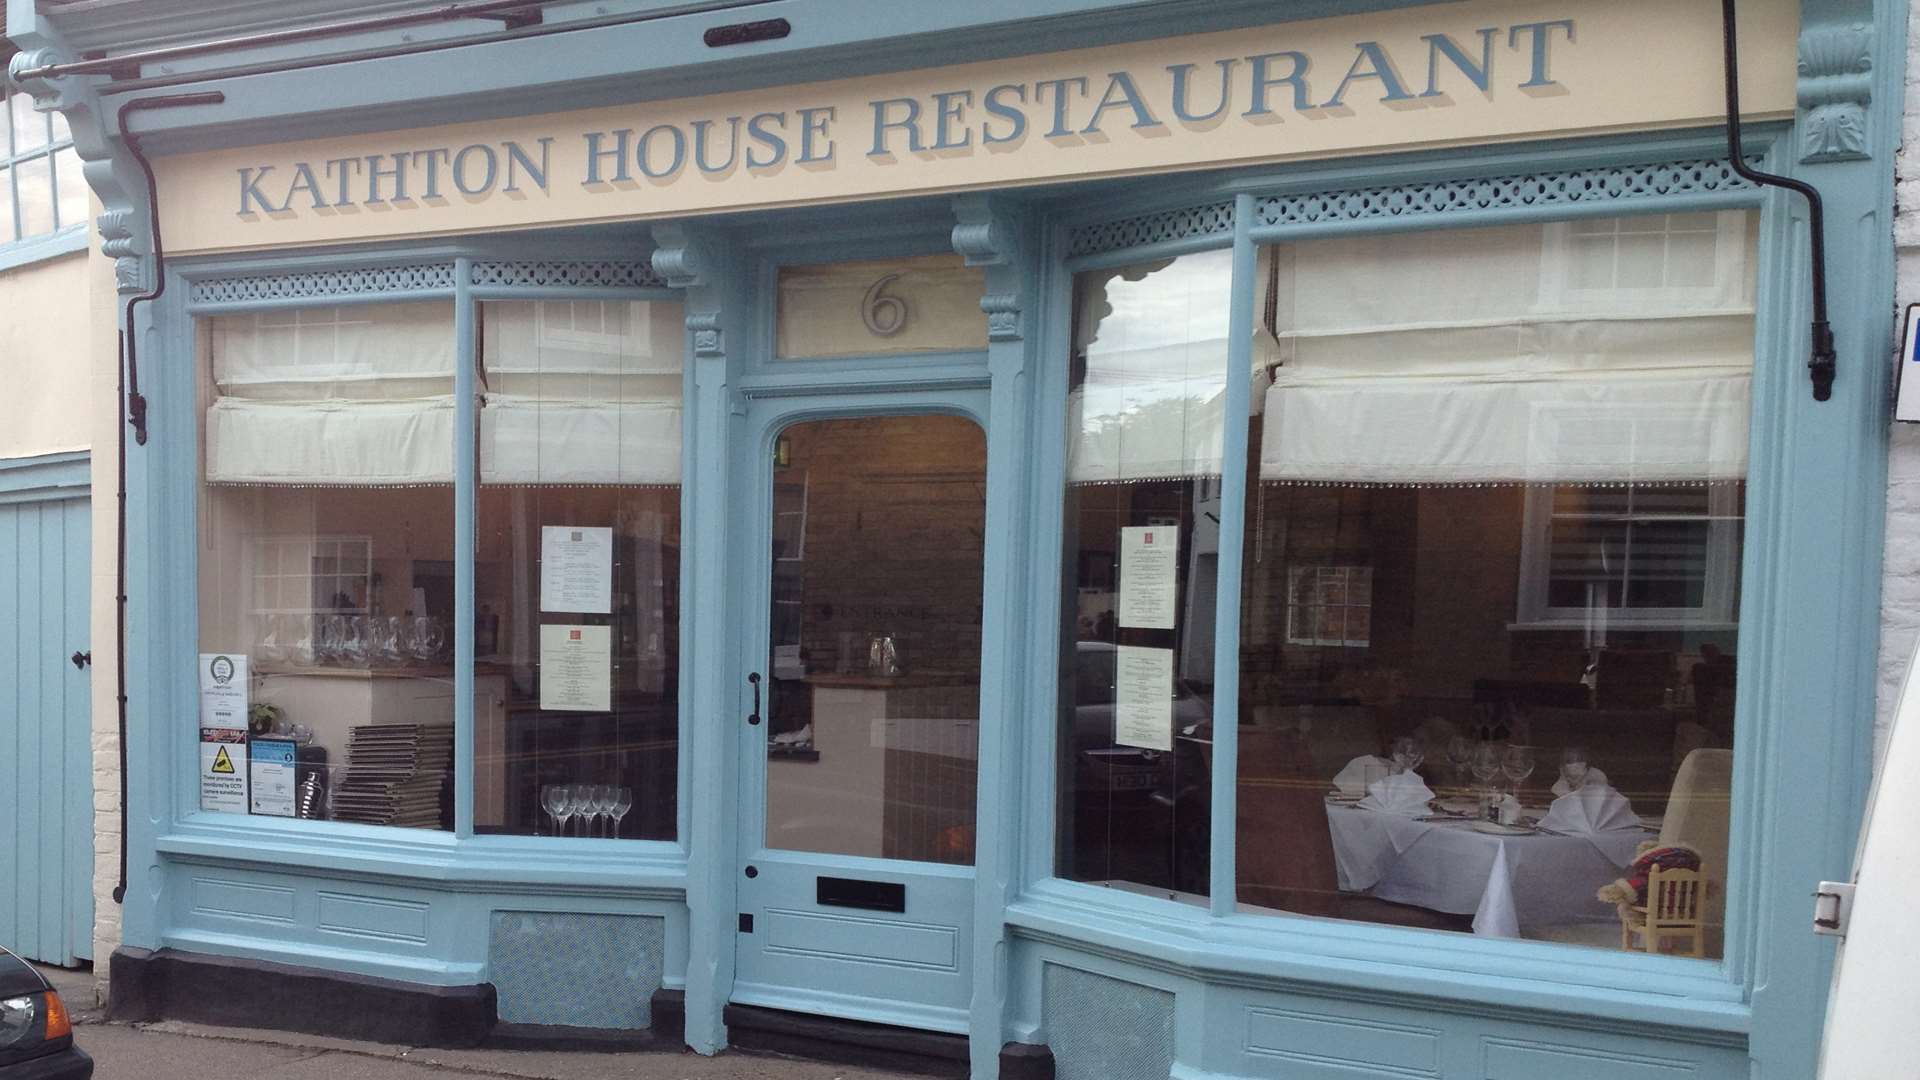 Kathton House, in Sturry, is Kent's best restaurant according to TripAdvisor